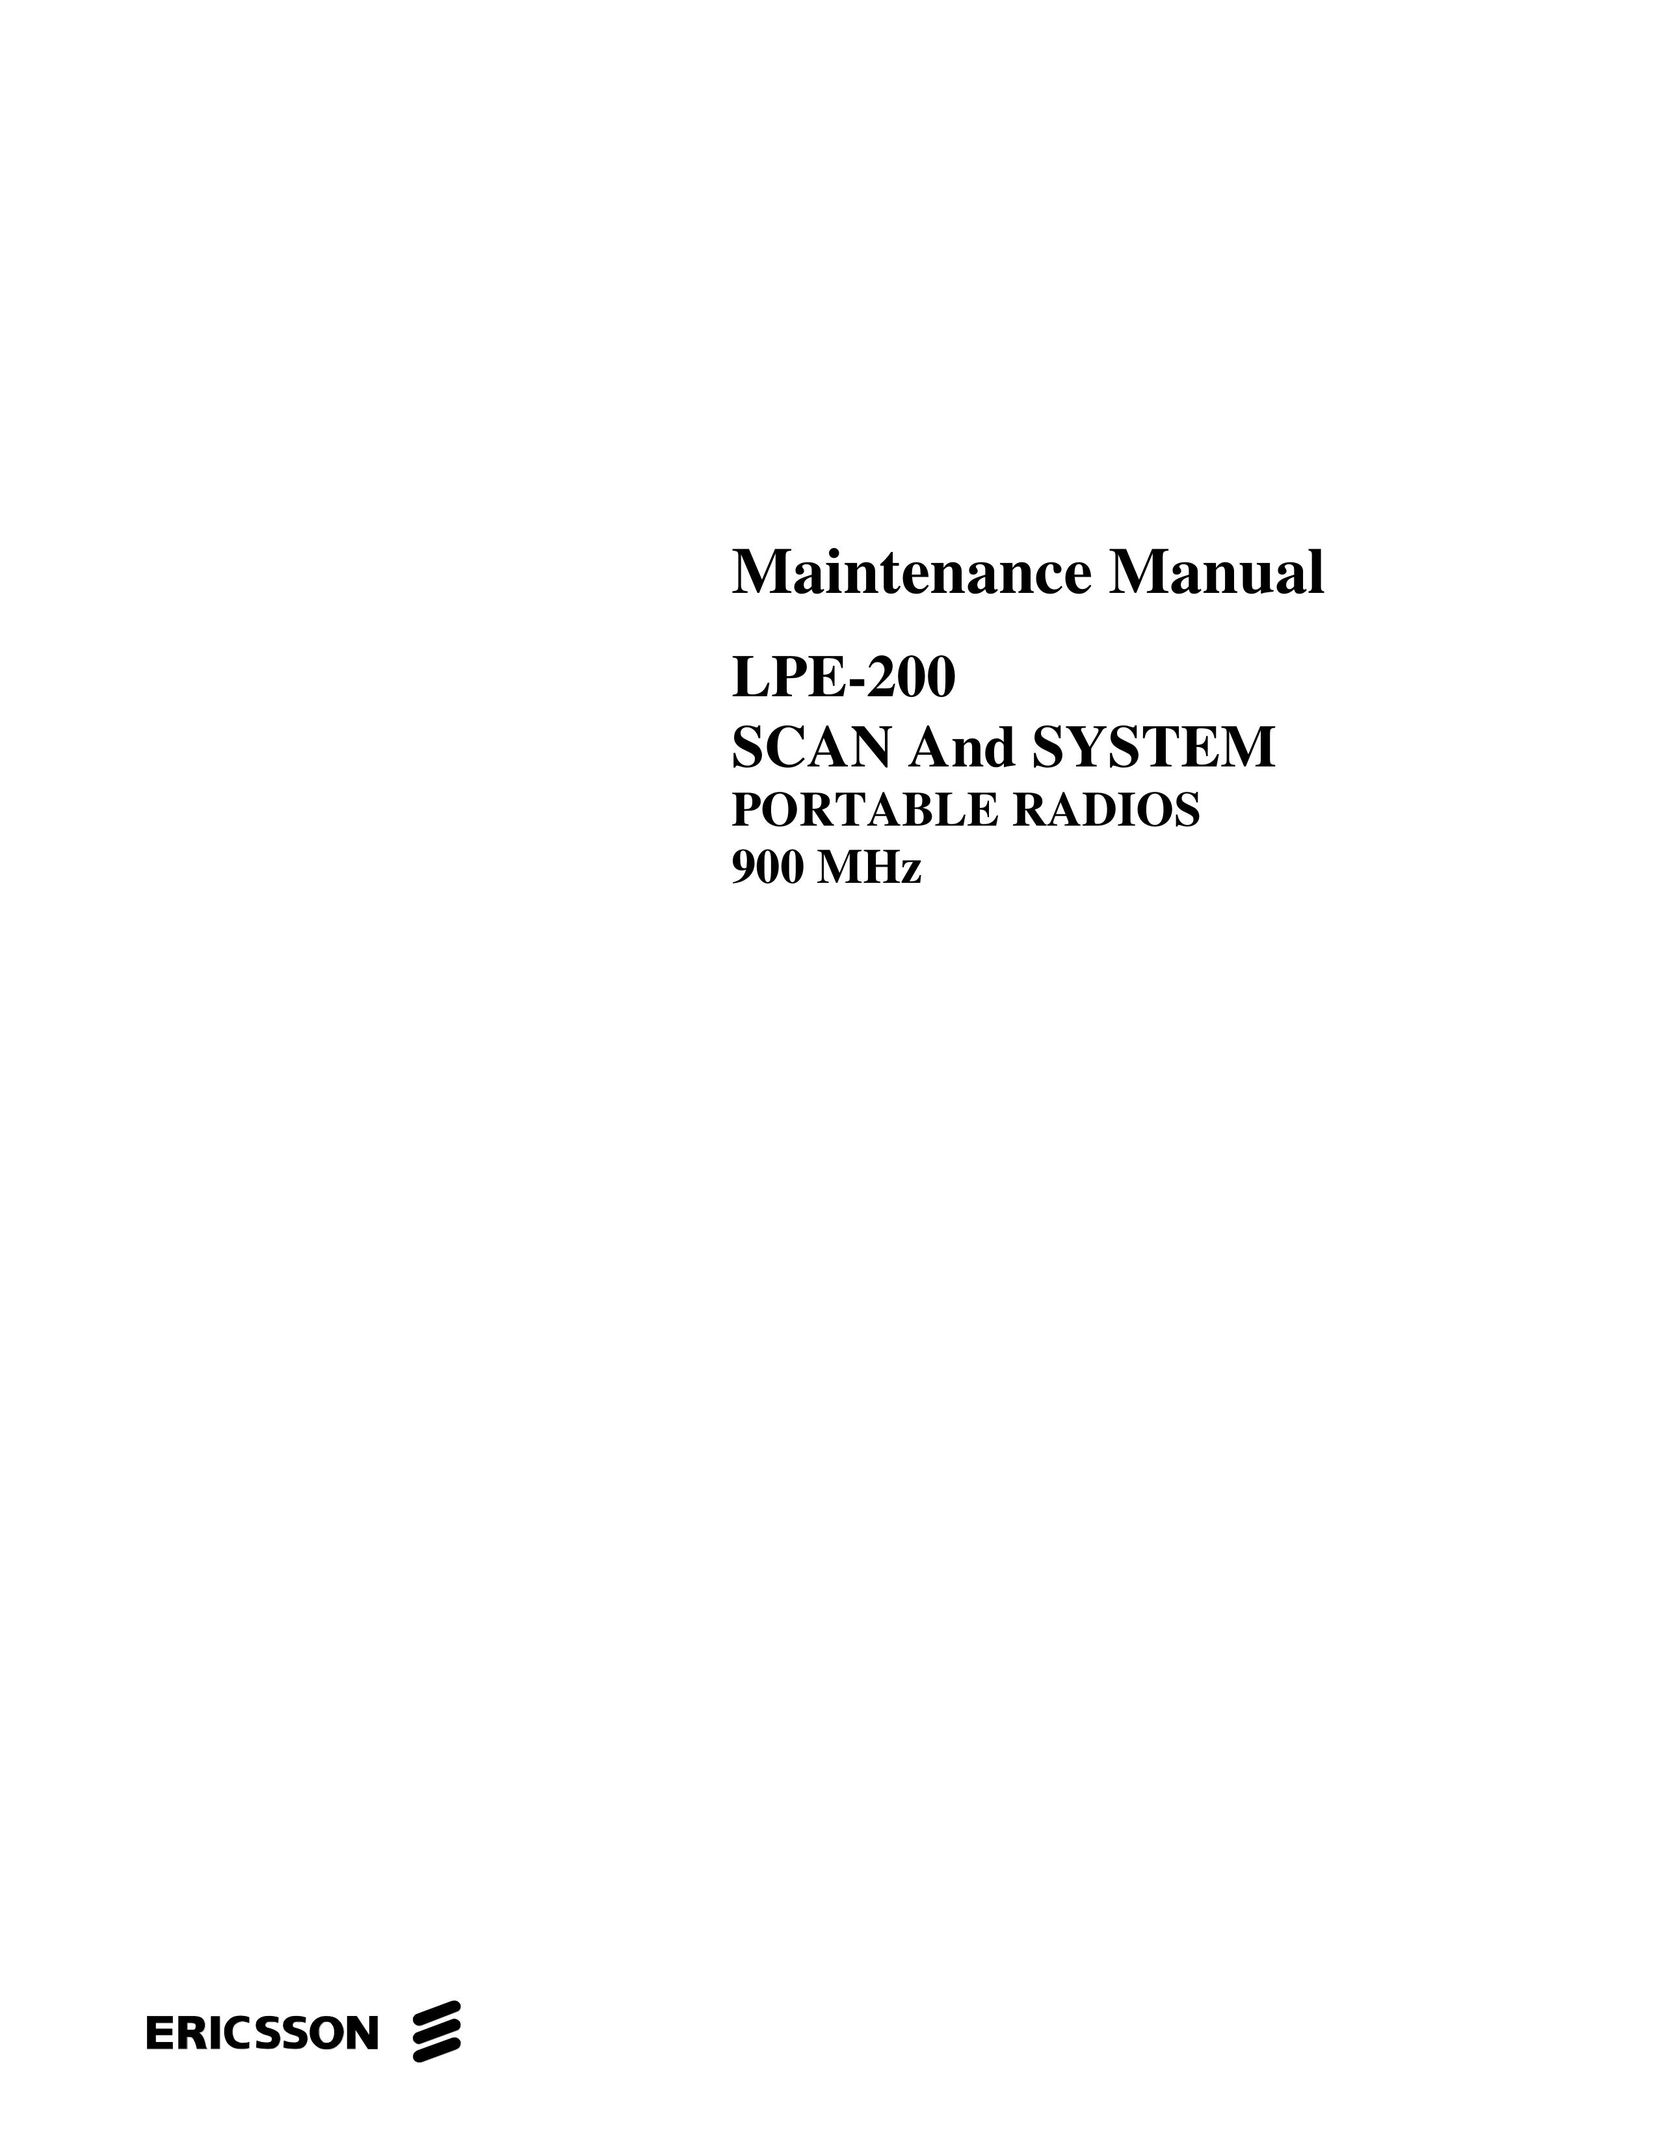 Ericsson LPE-200 Portable Radio User Manual